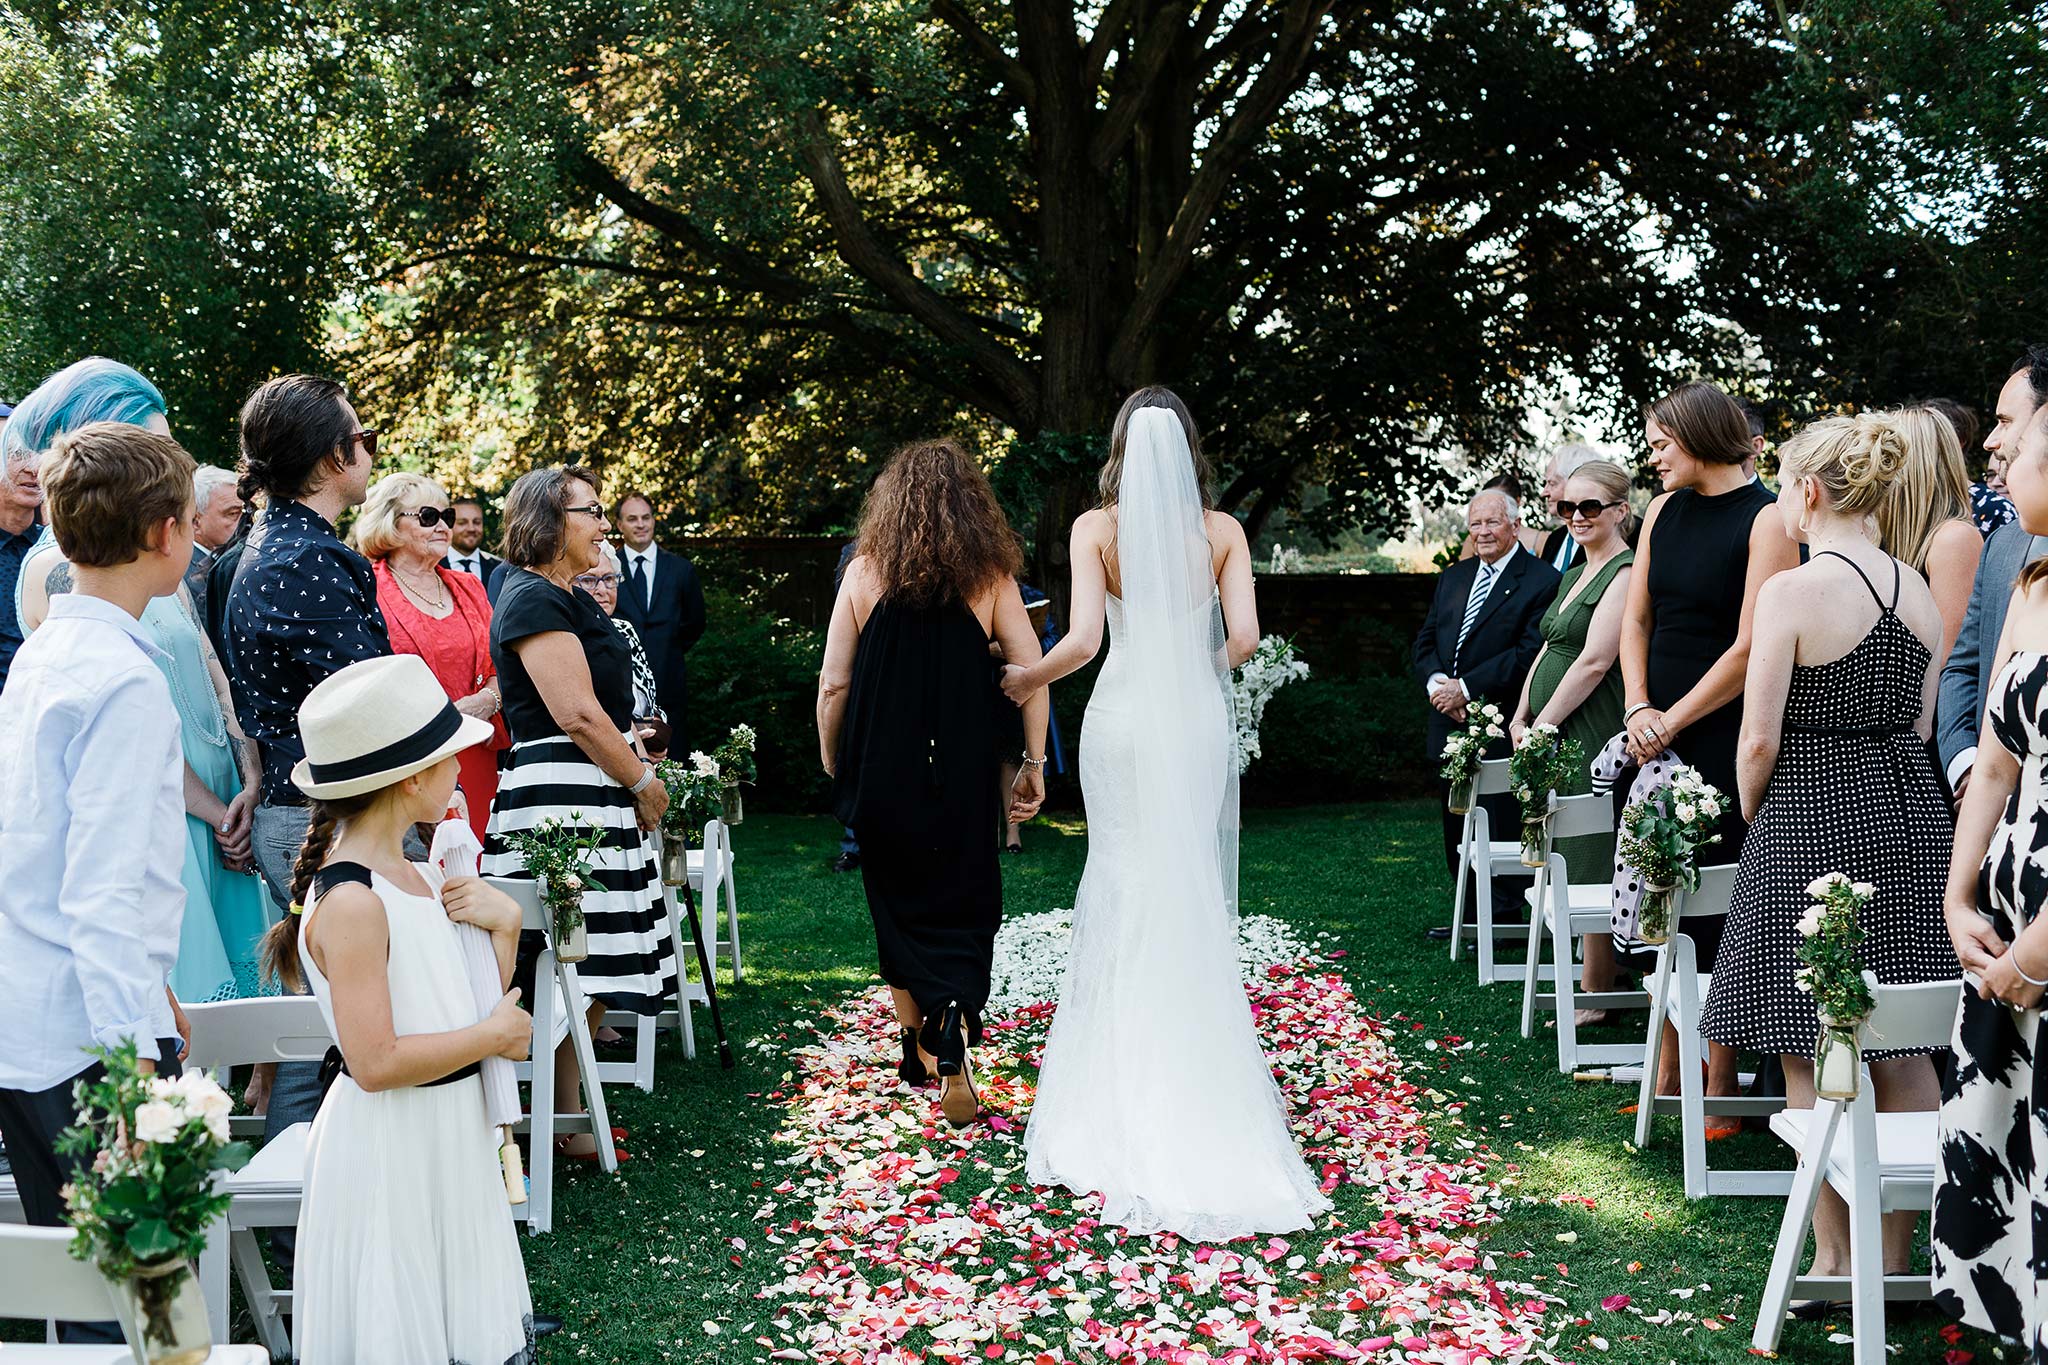 Launceston-Brickendon-barn-Wedding-Photographer-ceremony-bridal-entrance